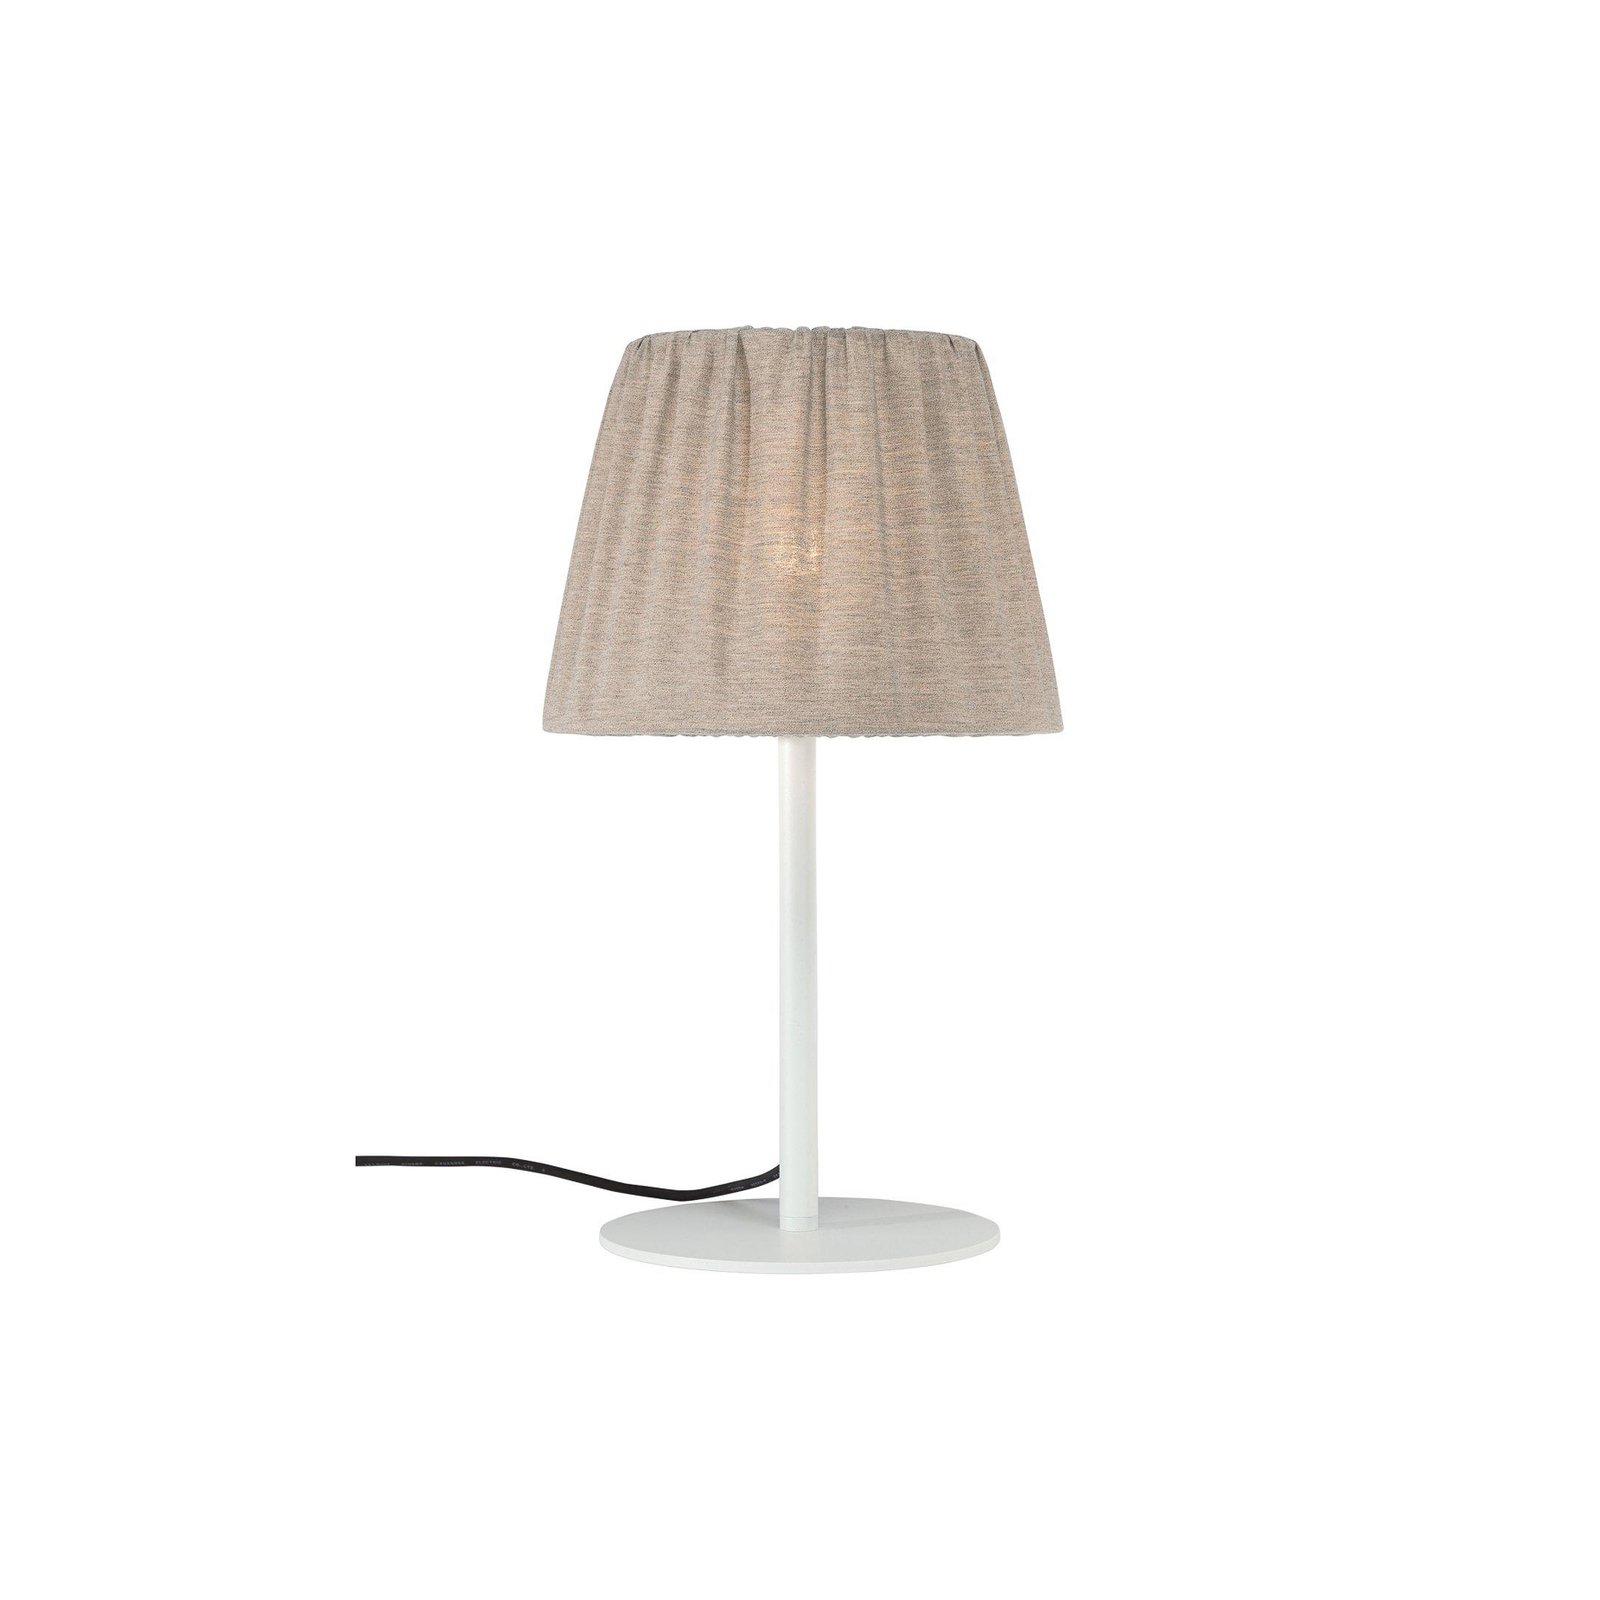 PR Home lámpara de mesa de exterior Agnar, blanco / marrón, 57 cm